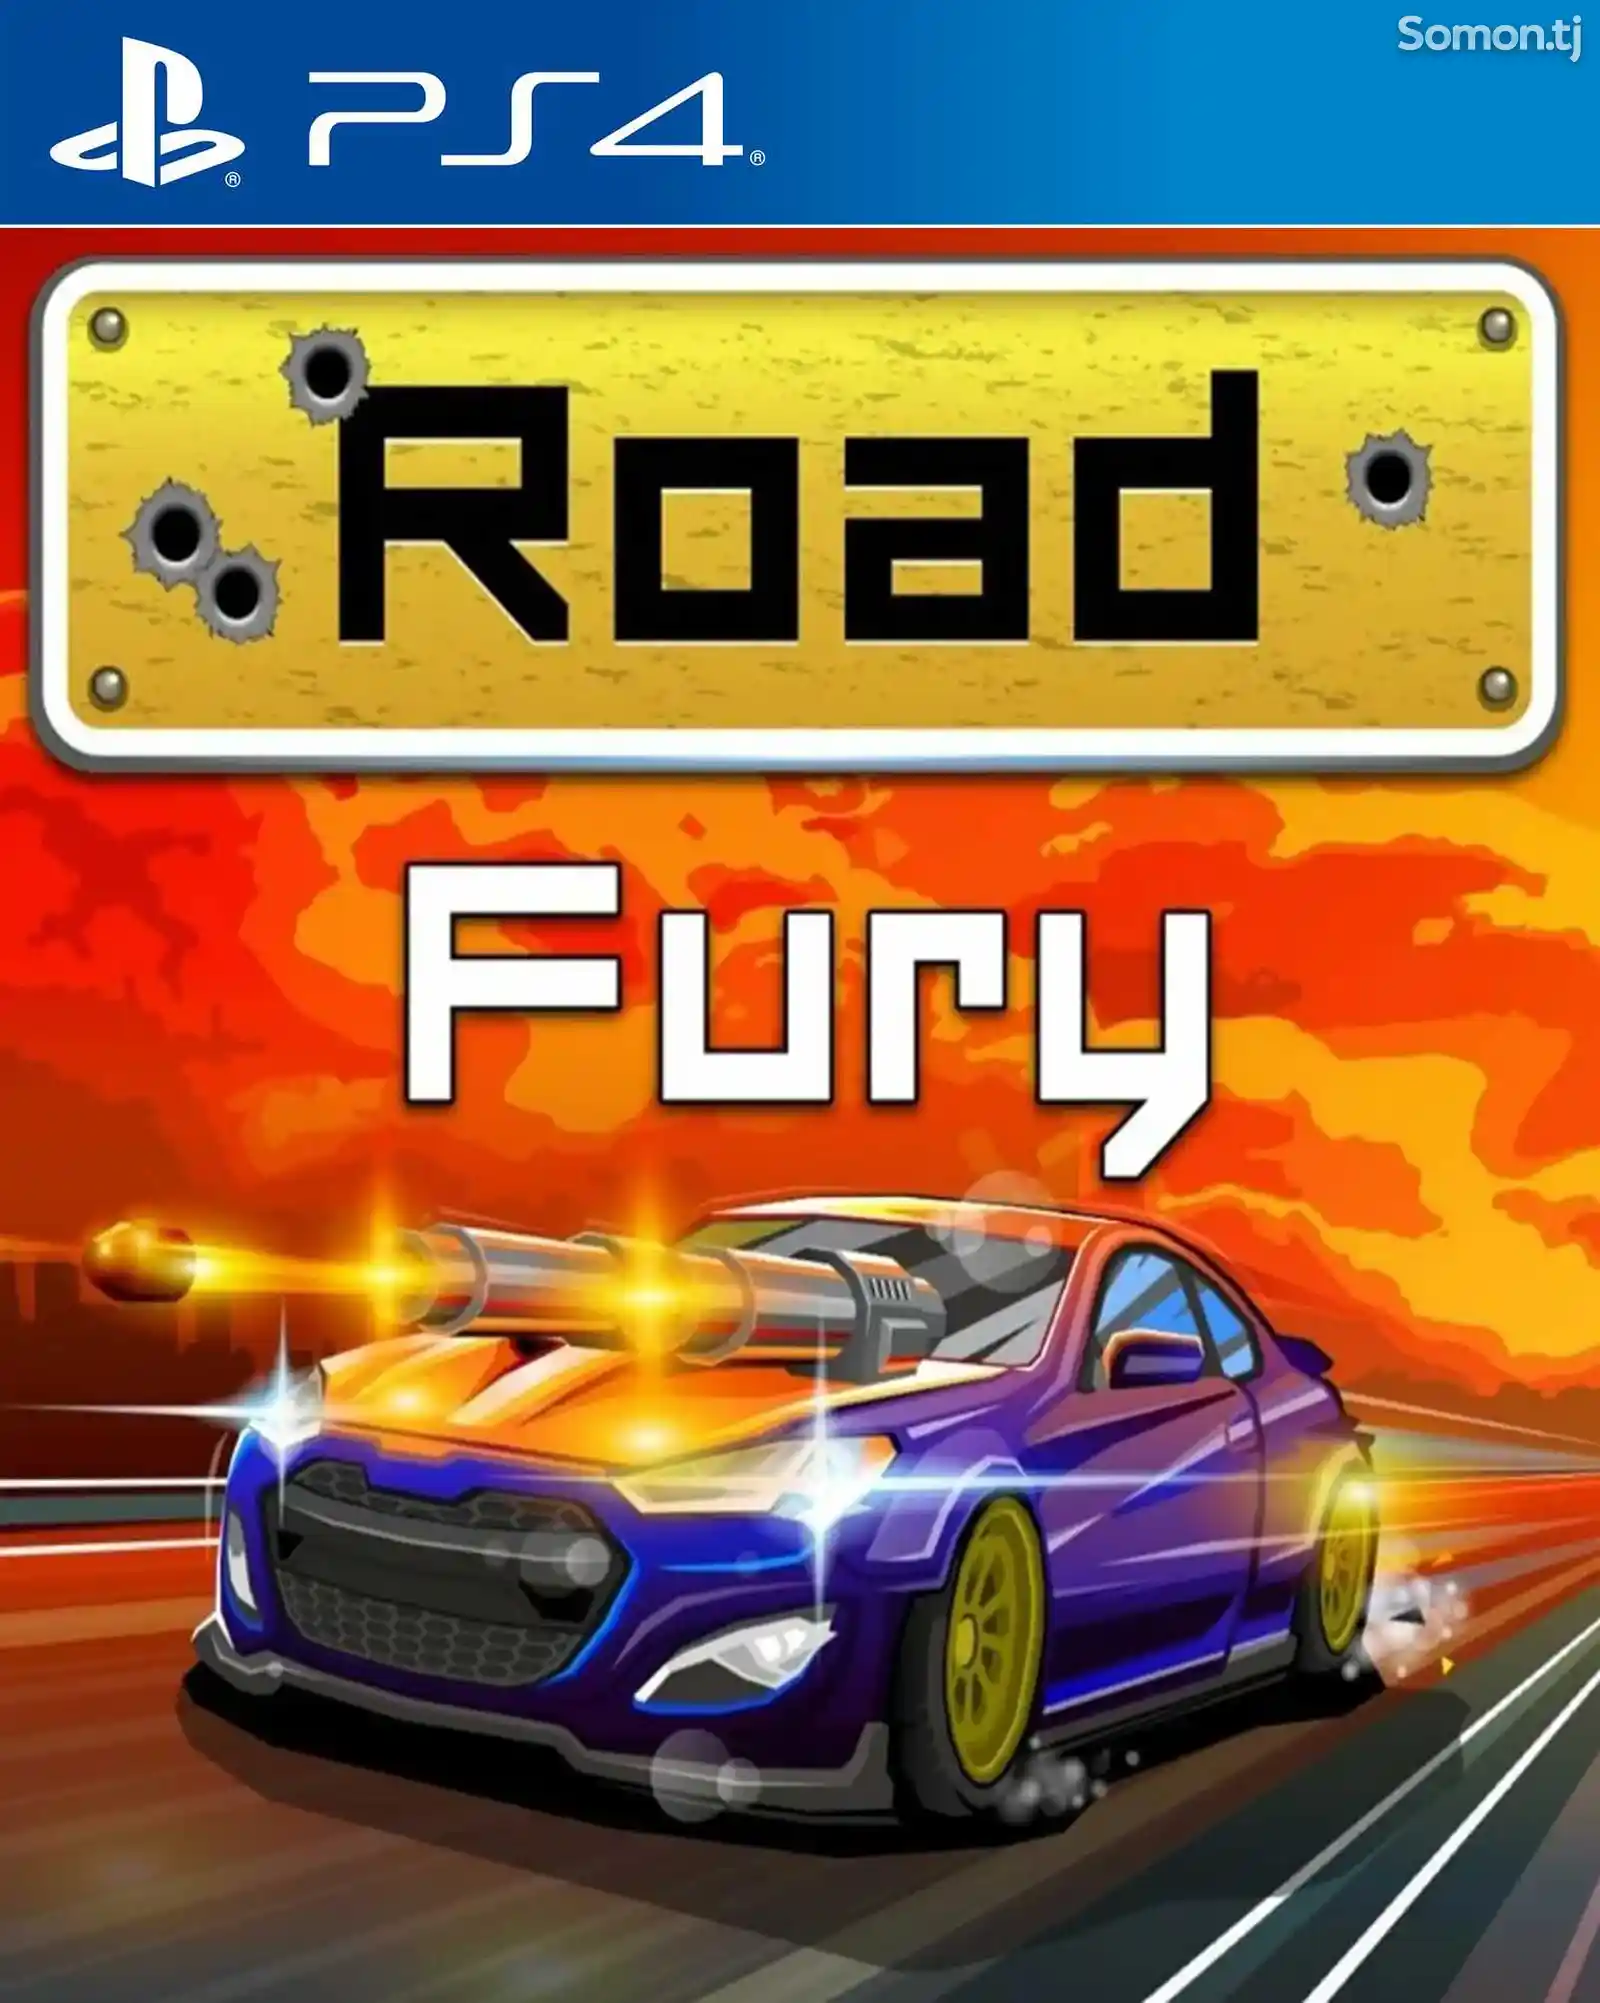 Игра Road fury для PS-4 / 5.05 / 6.72 / 7.02 / 7.55 / 9.00 /-1